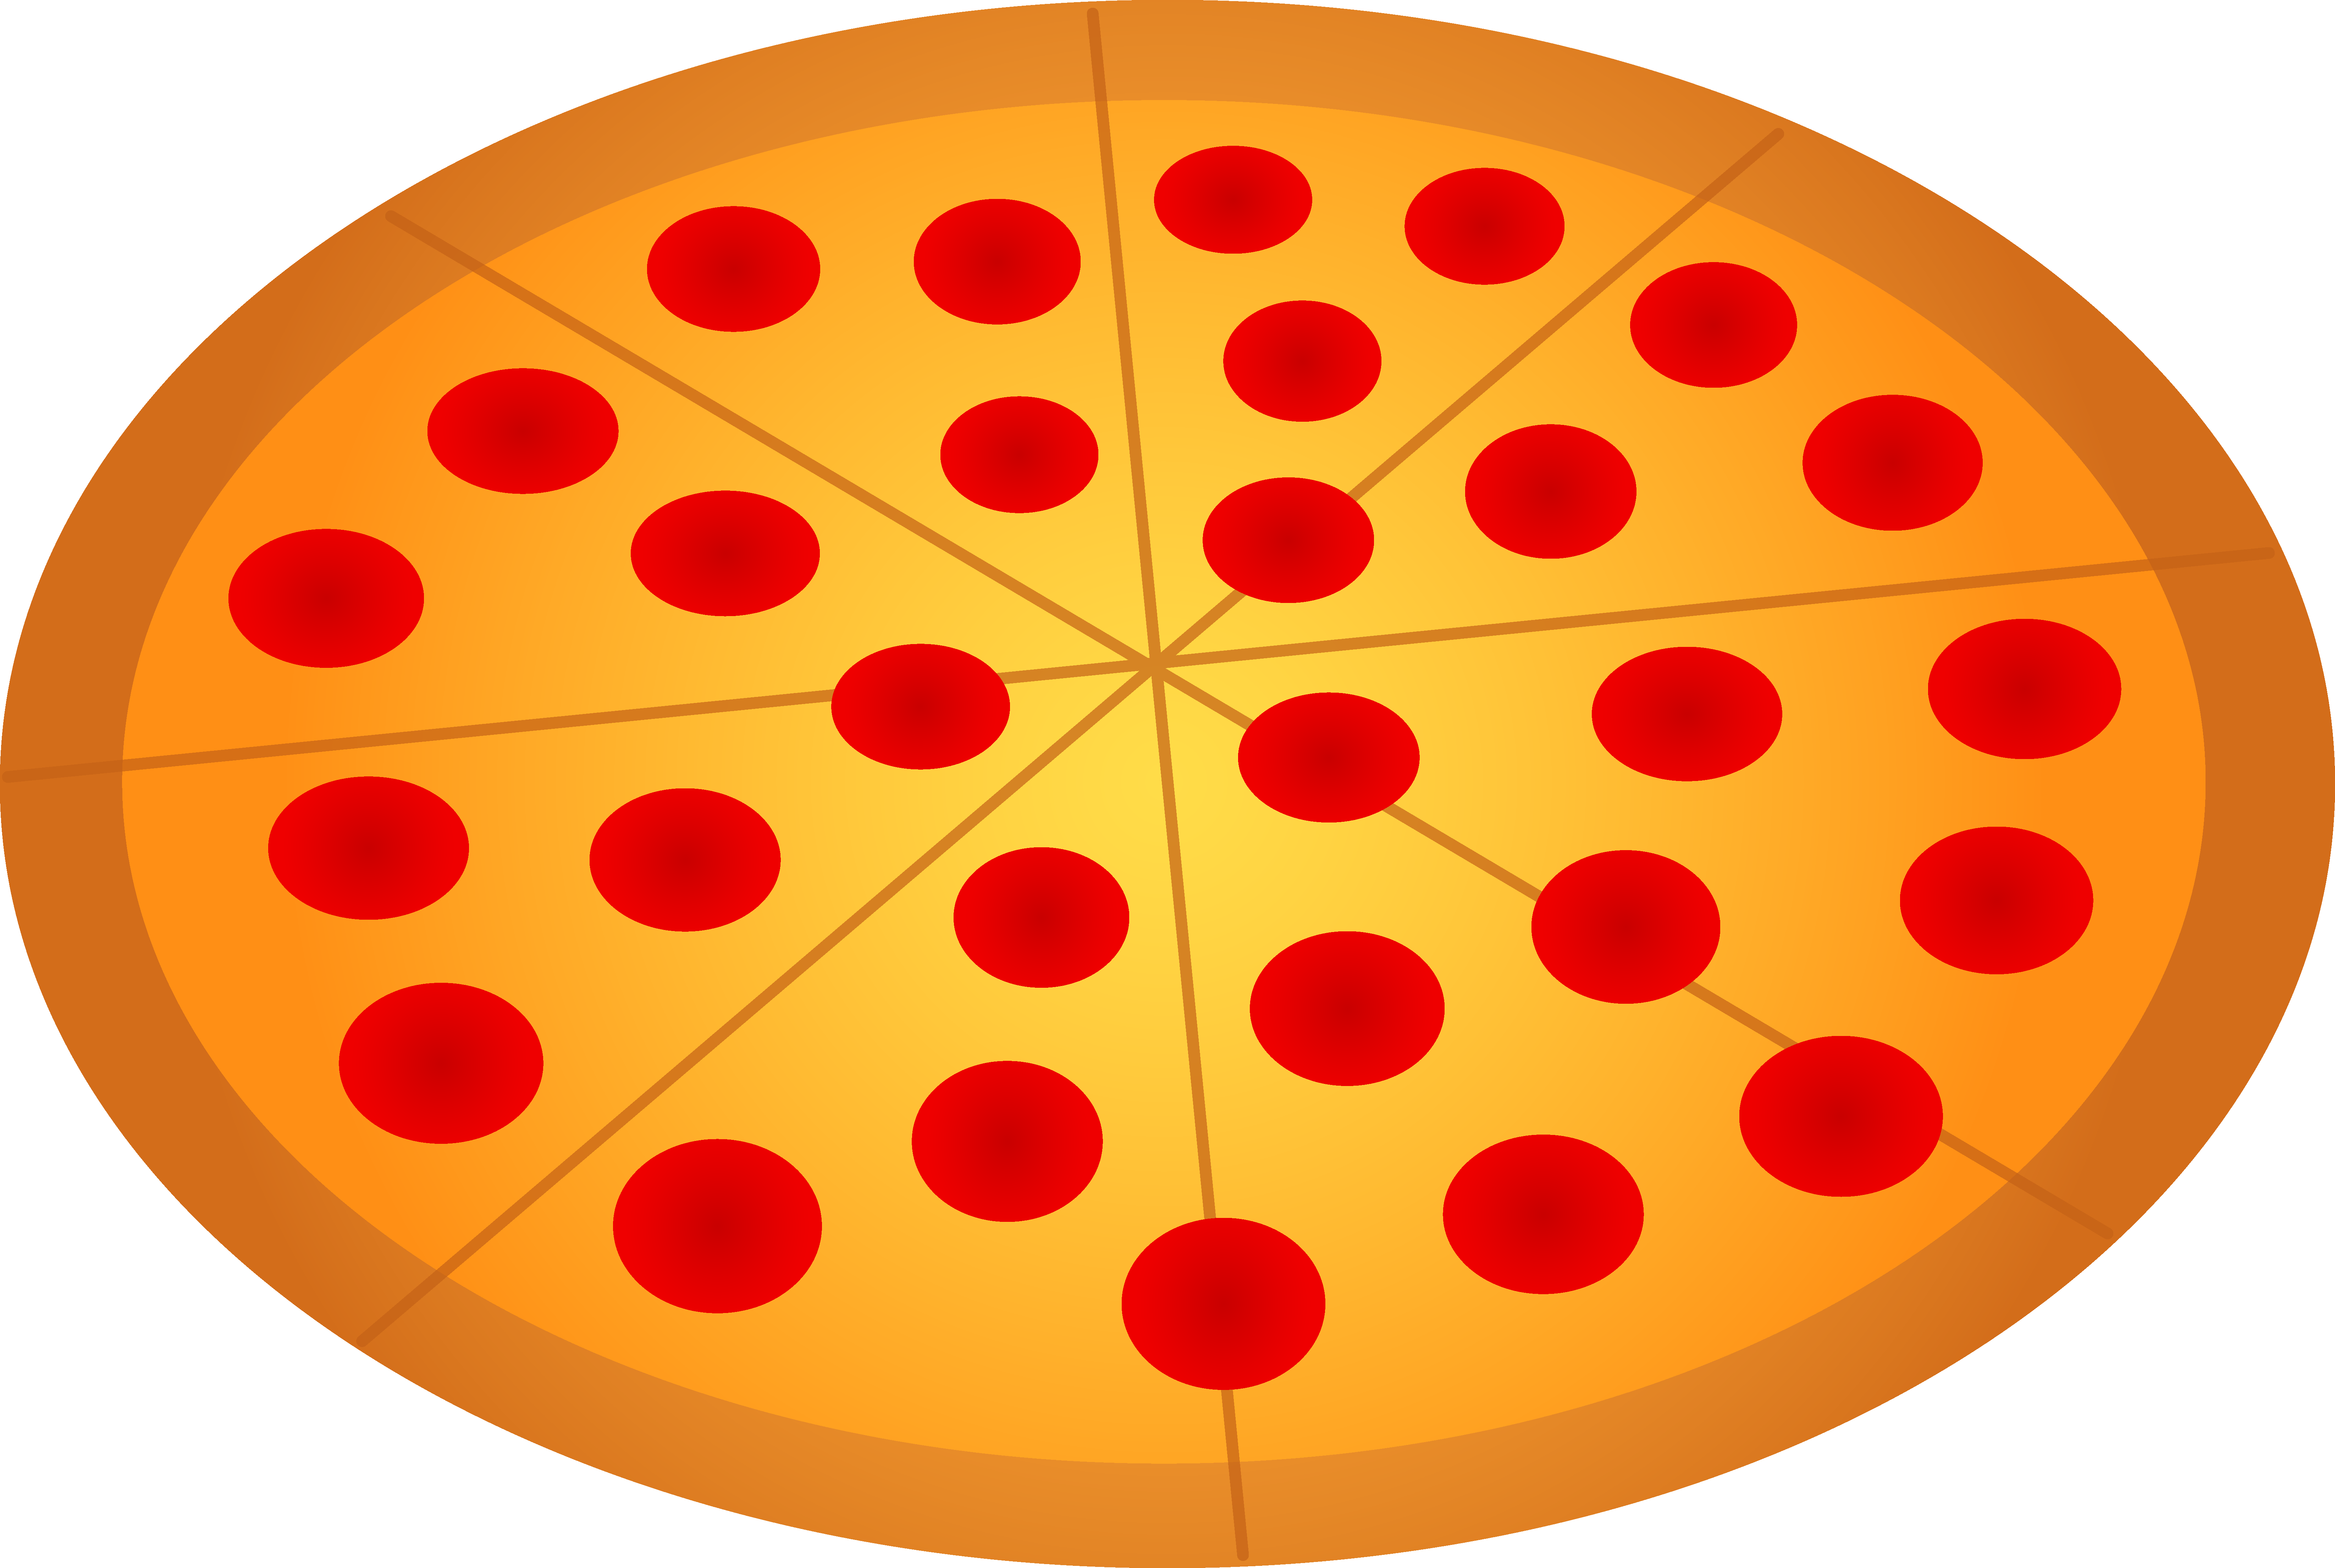 pepperoni pizza cartoon